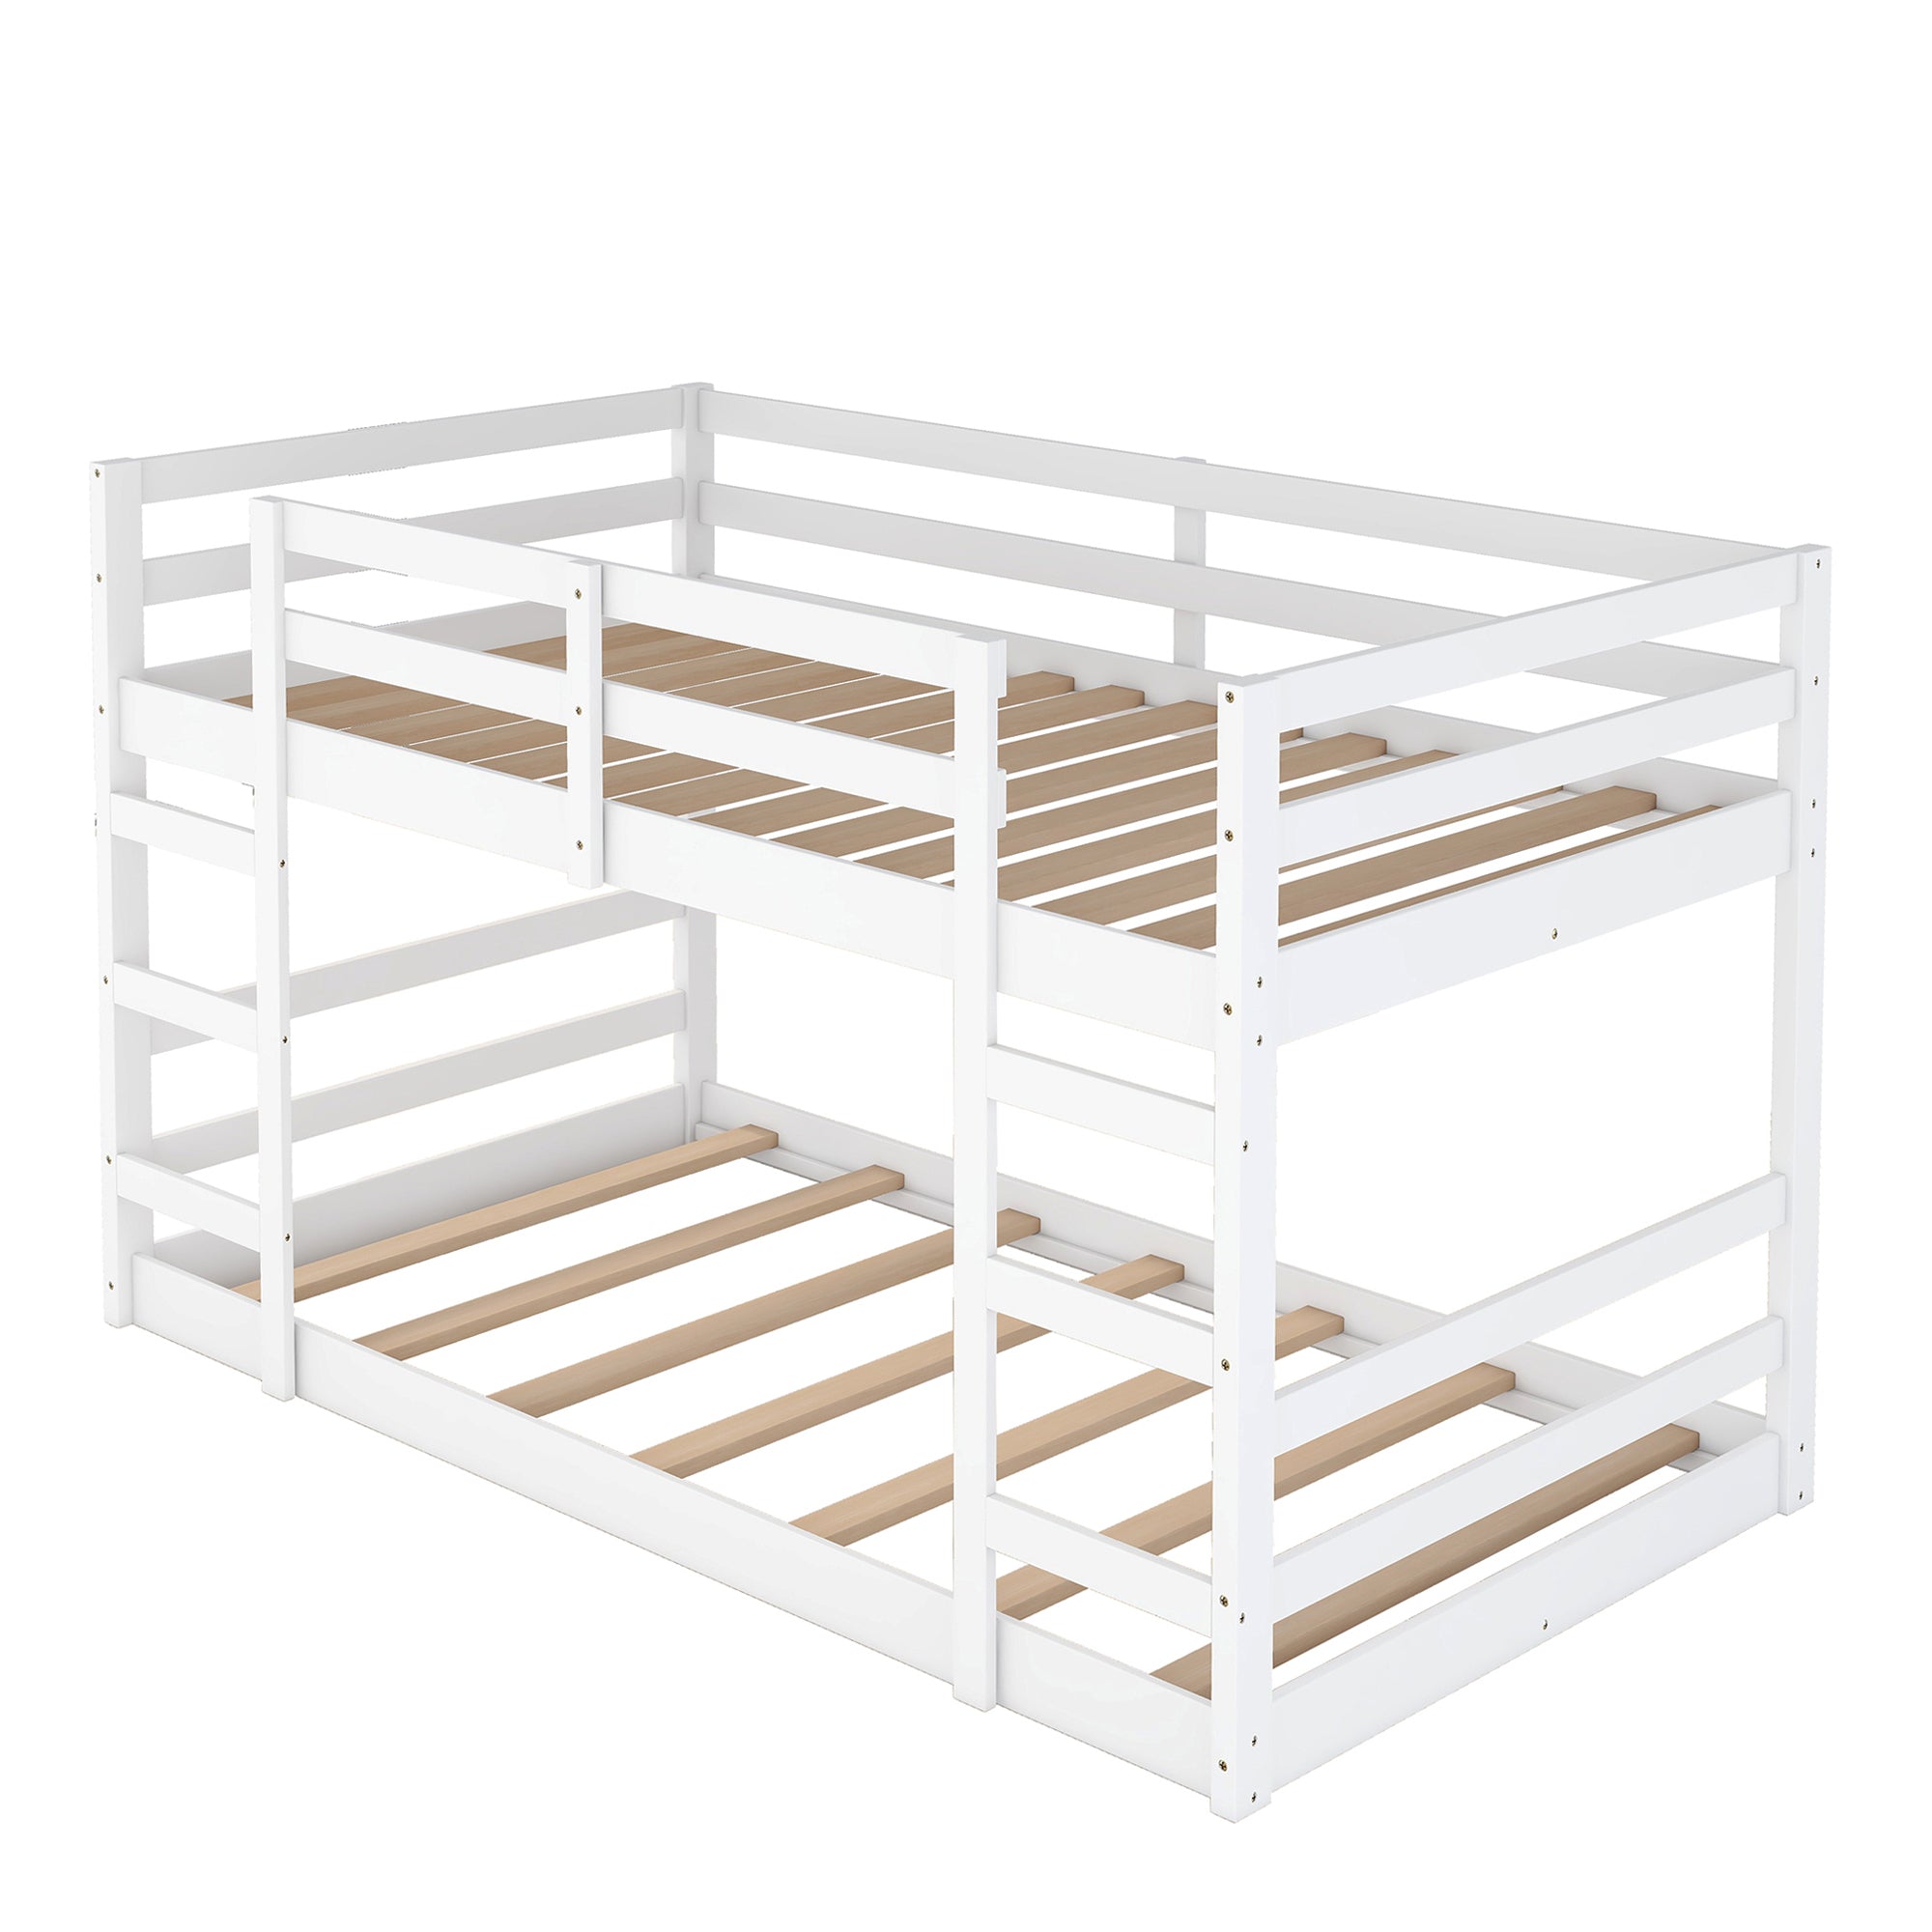 Bellemave® Wood Floor Bunk Bed with Ladder Bellemave®